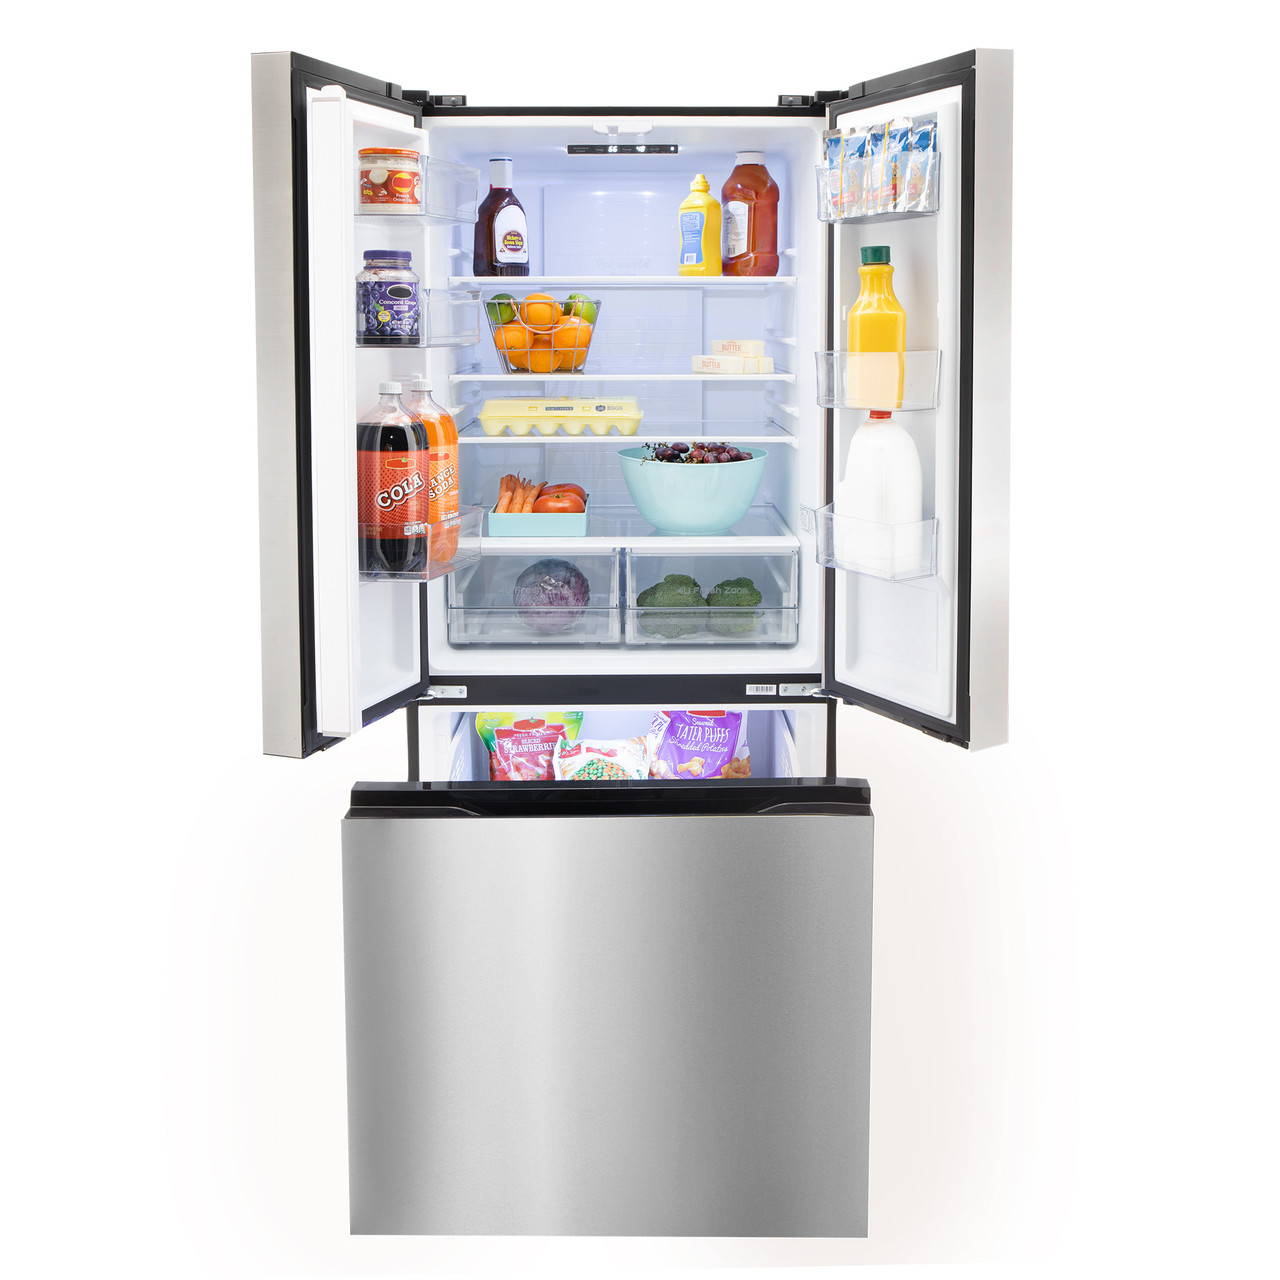 RV Refrigerator 4.4 Cubic Feet 12V Stainless Steel - RecPro